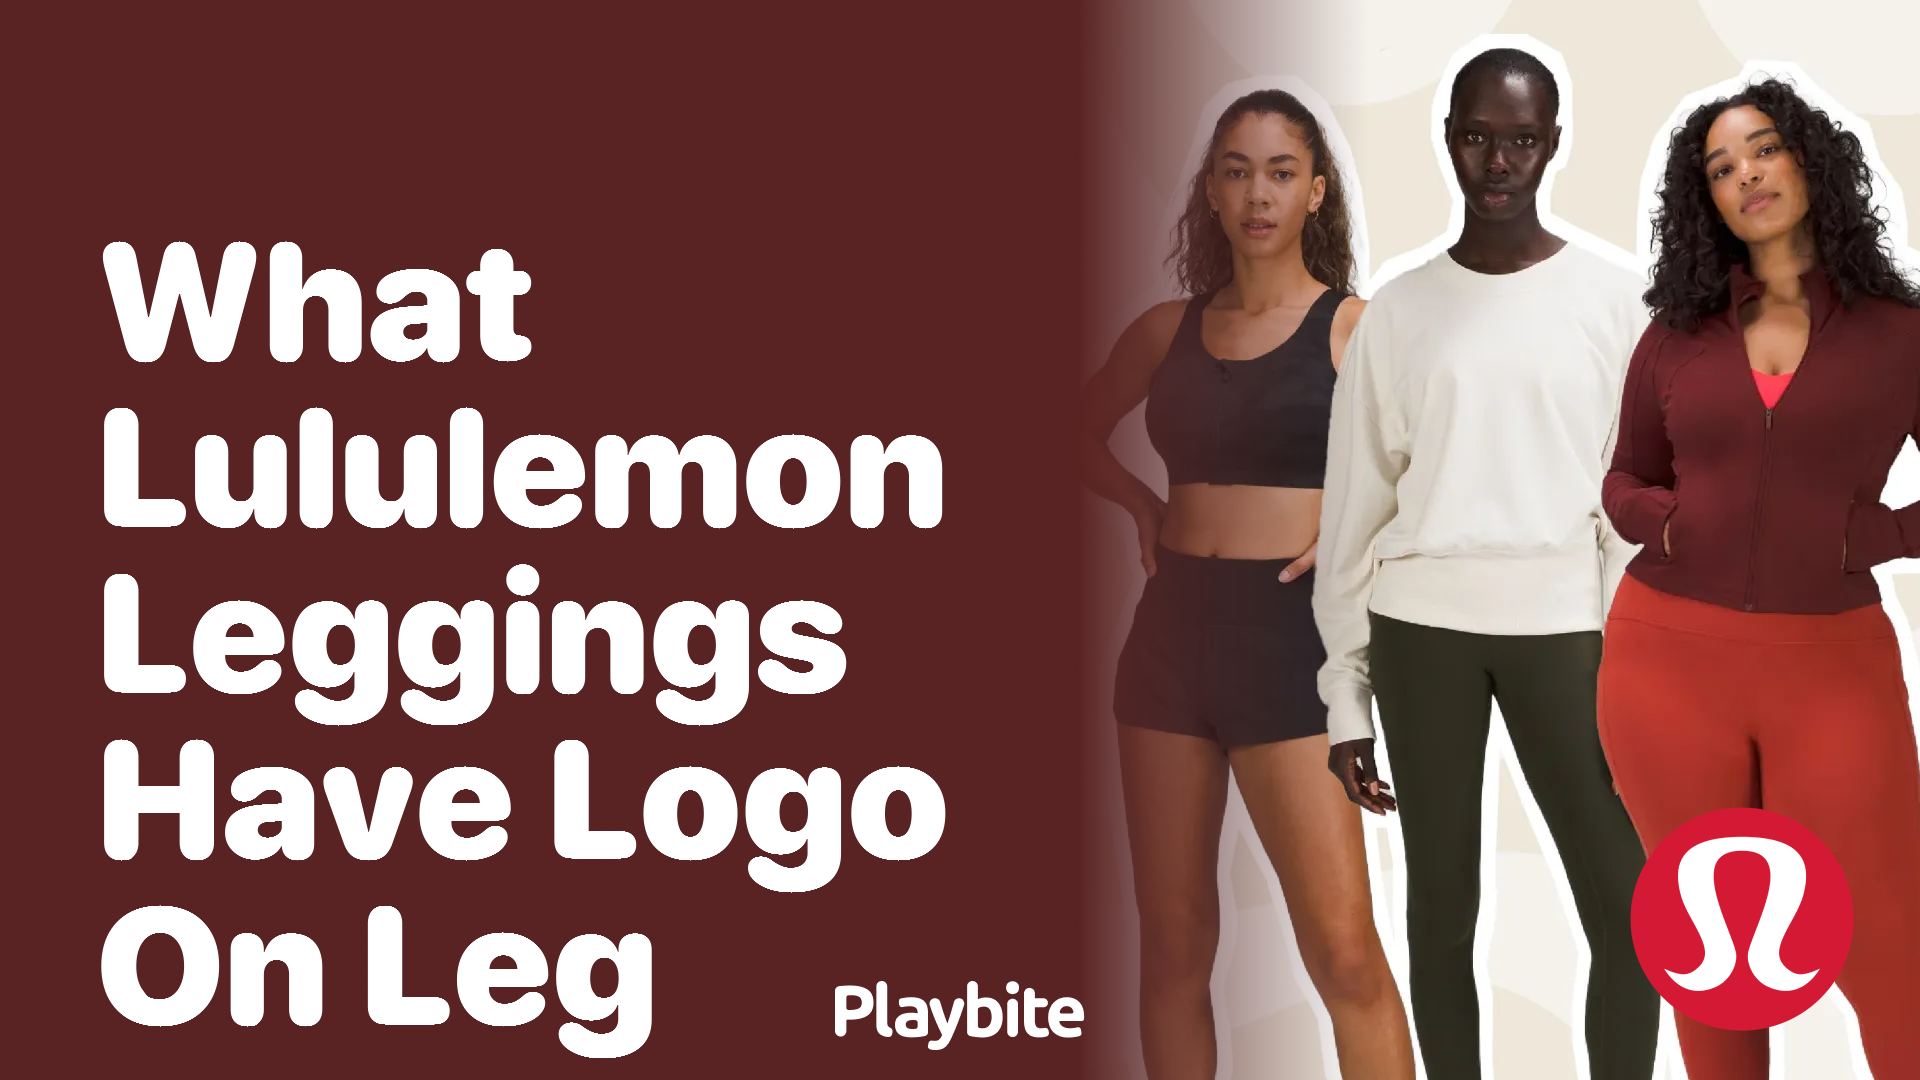 Which Lululemon Leggings Have the Logo on the Leg? - Playbite